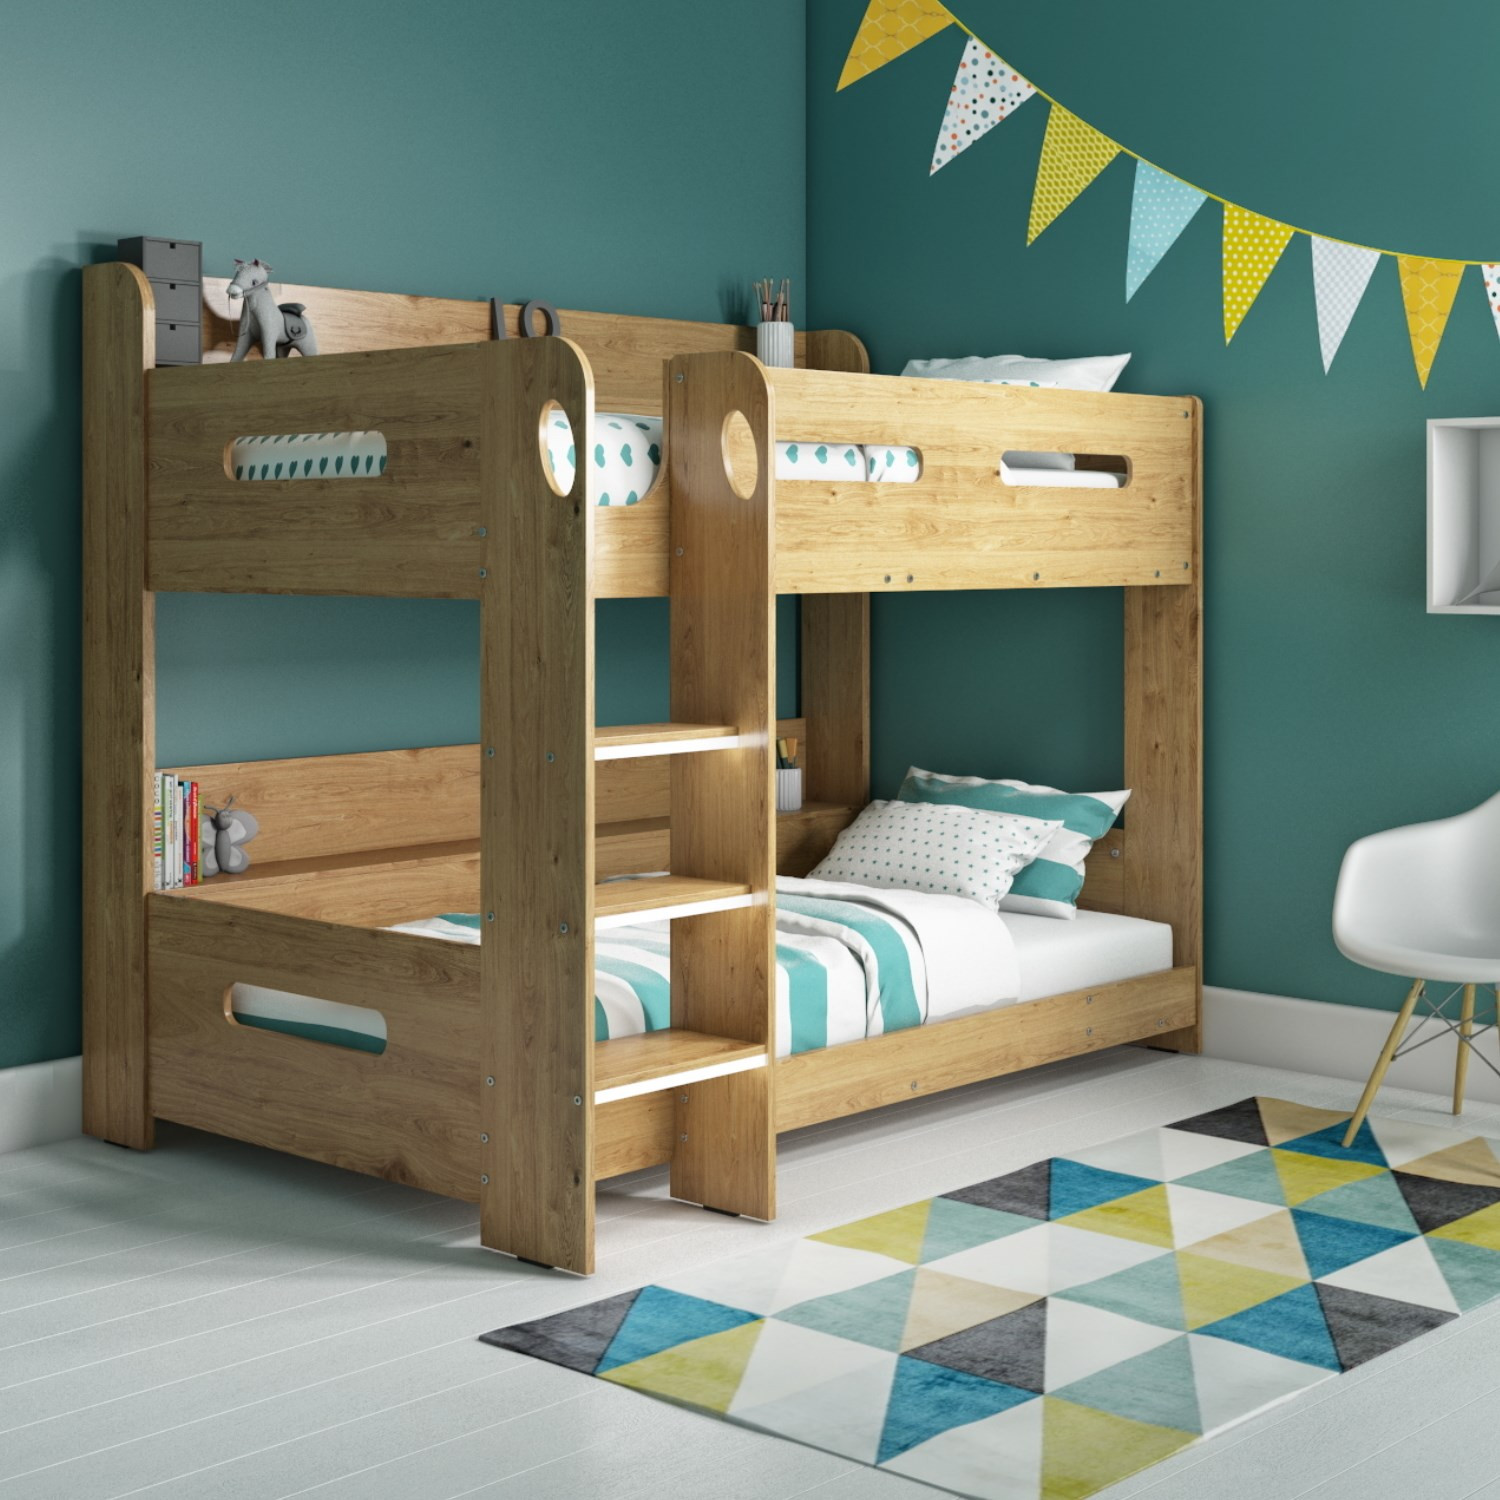 Kids Loft Bed With Storage
 Modern Kids Oak Bunk Bed Storage Shelves